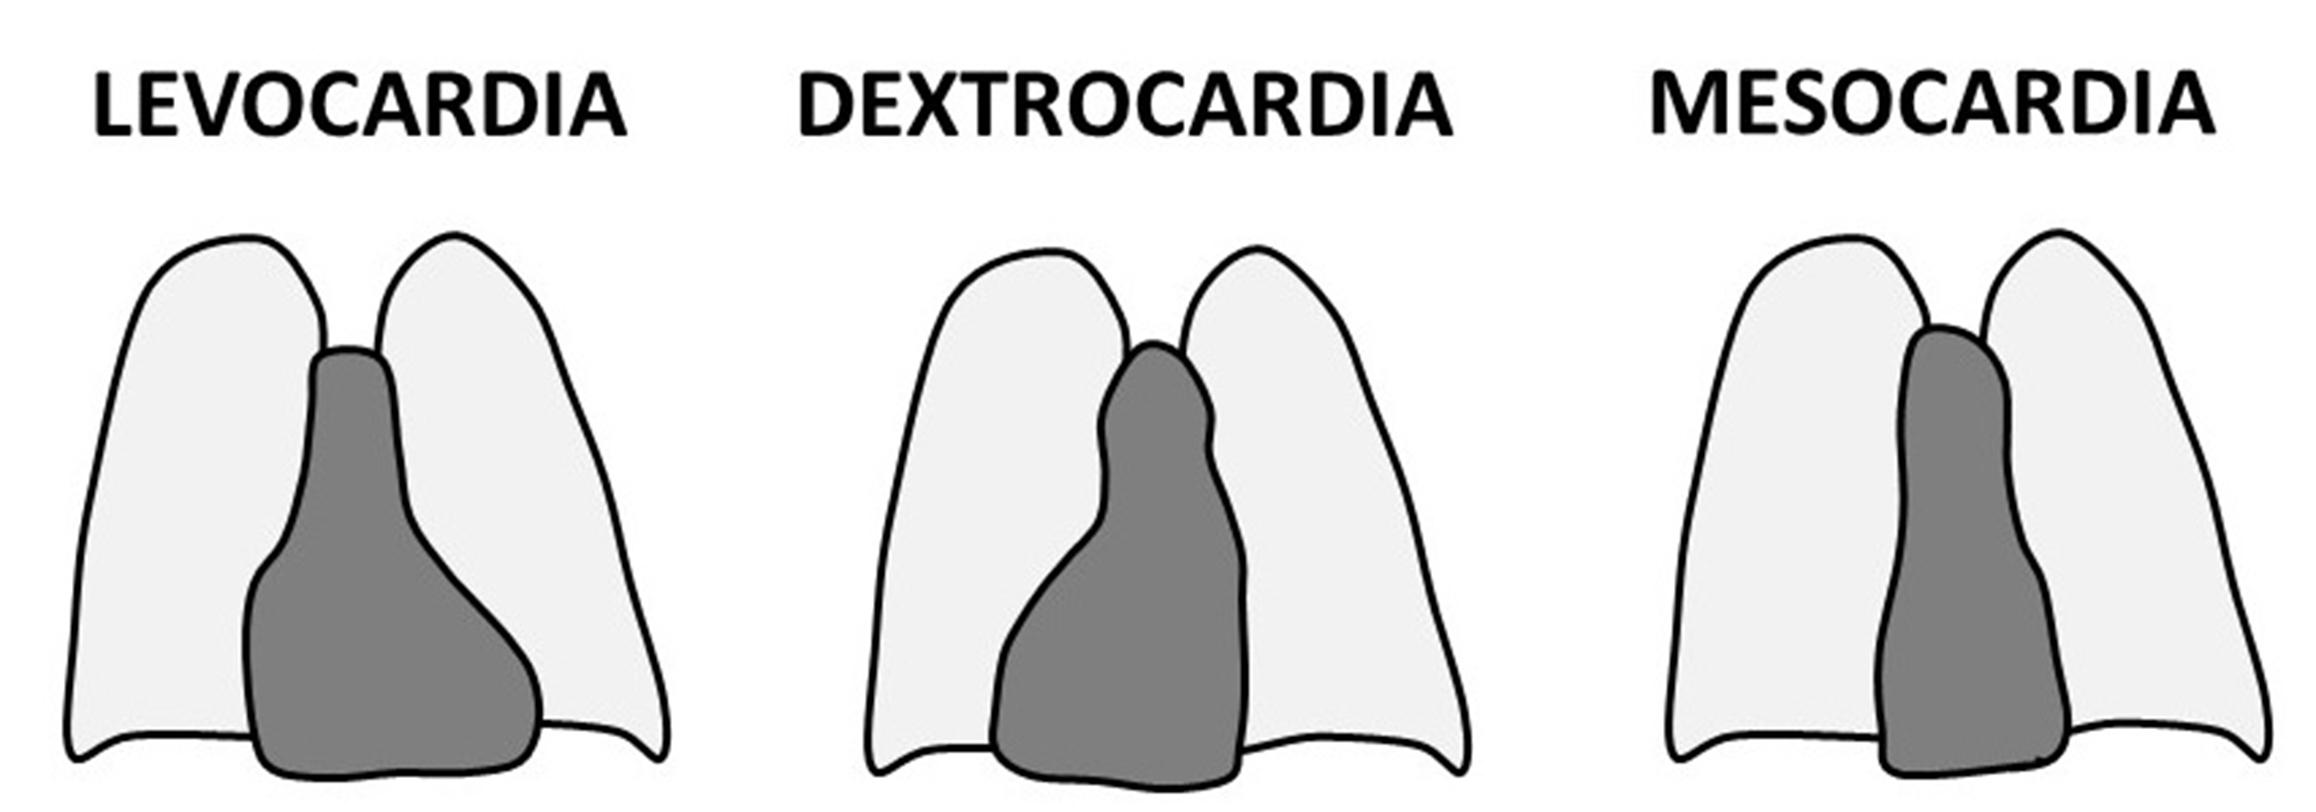 Figure 1, Cardiac positions.